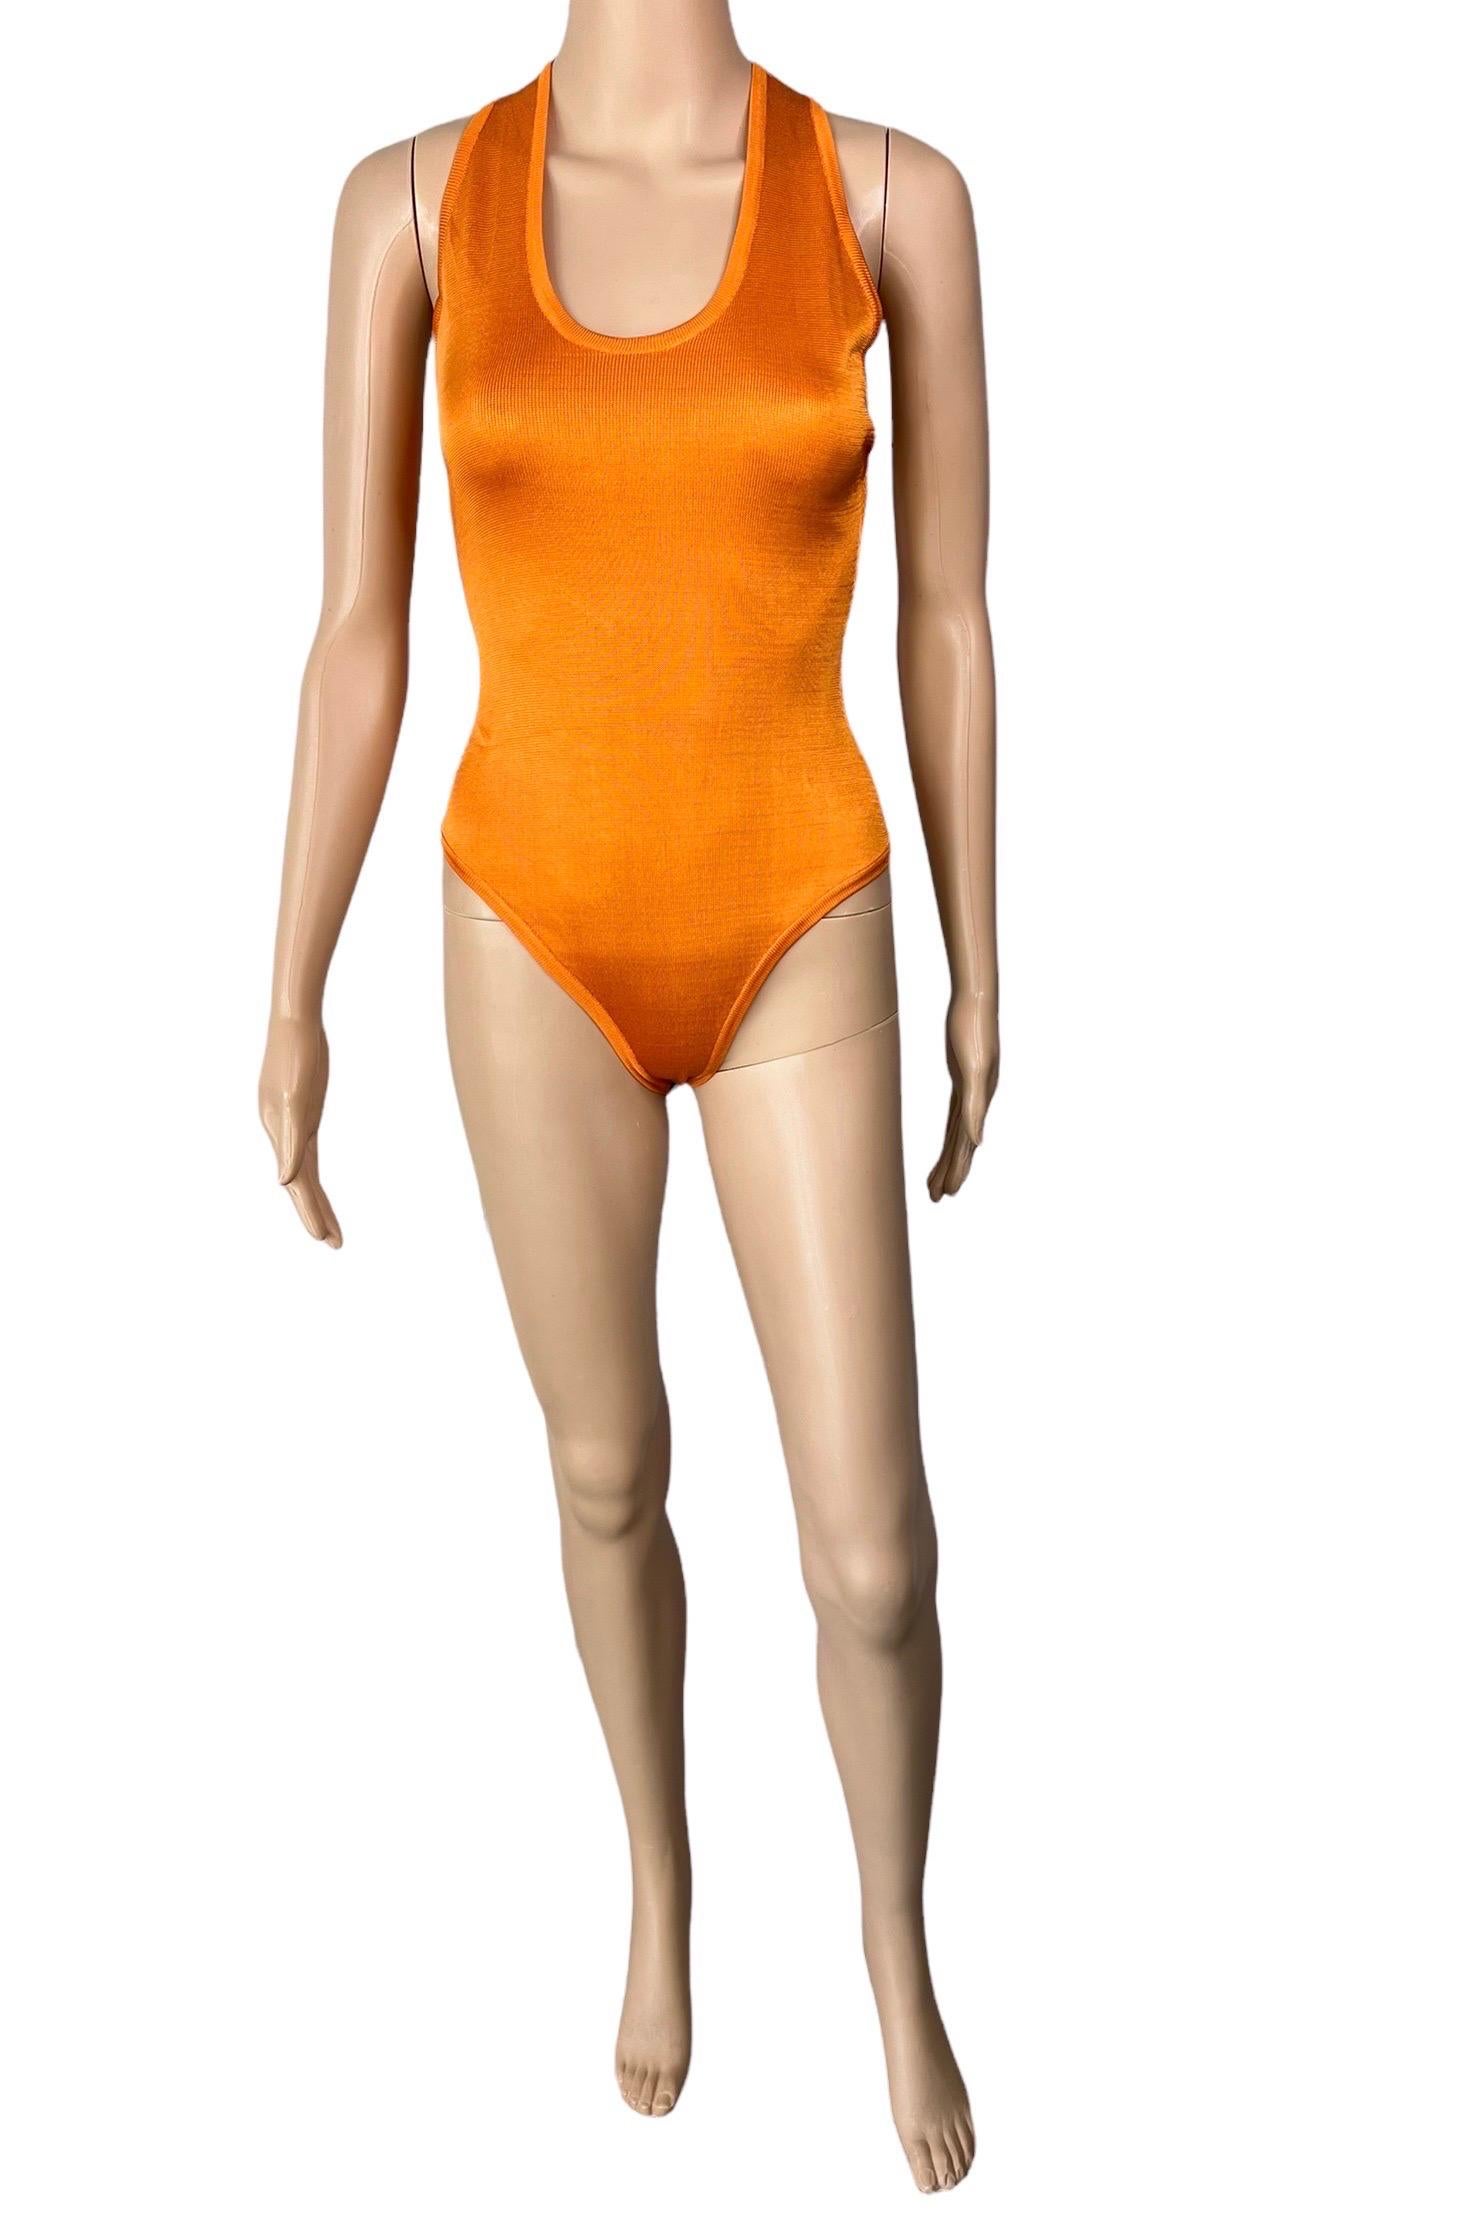 Azzedine Alaia Vintage S/S 1986 Open Back Orange Bodysuit Top For Sale 4